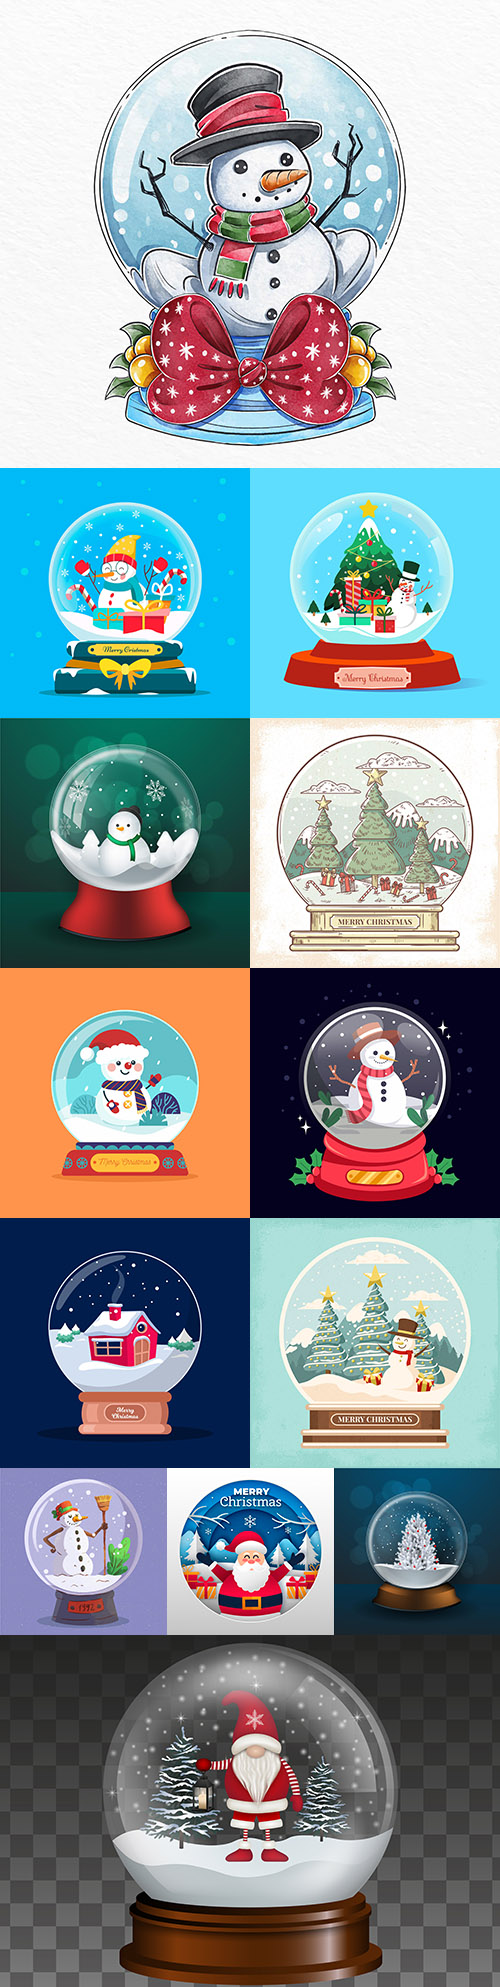 Christmas snow ball illustration in flat design
